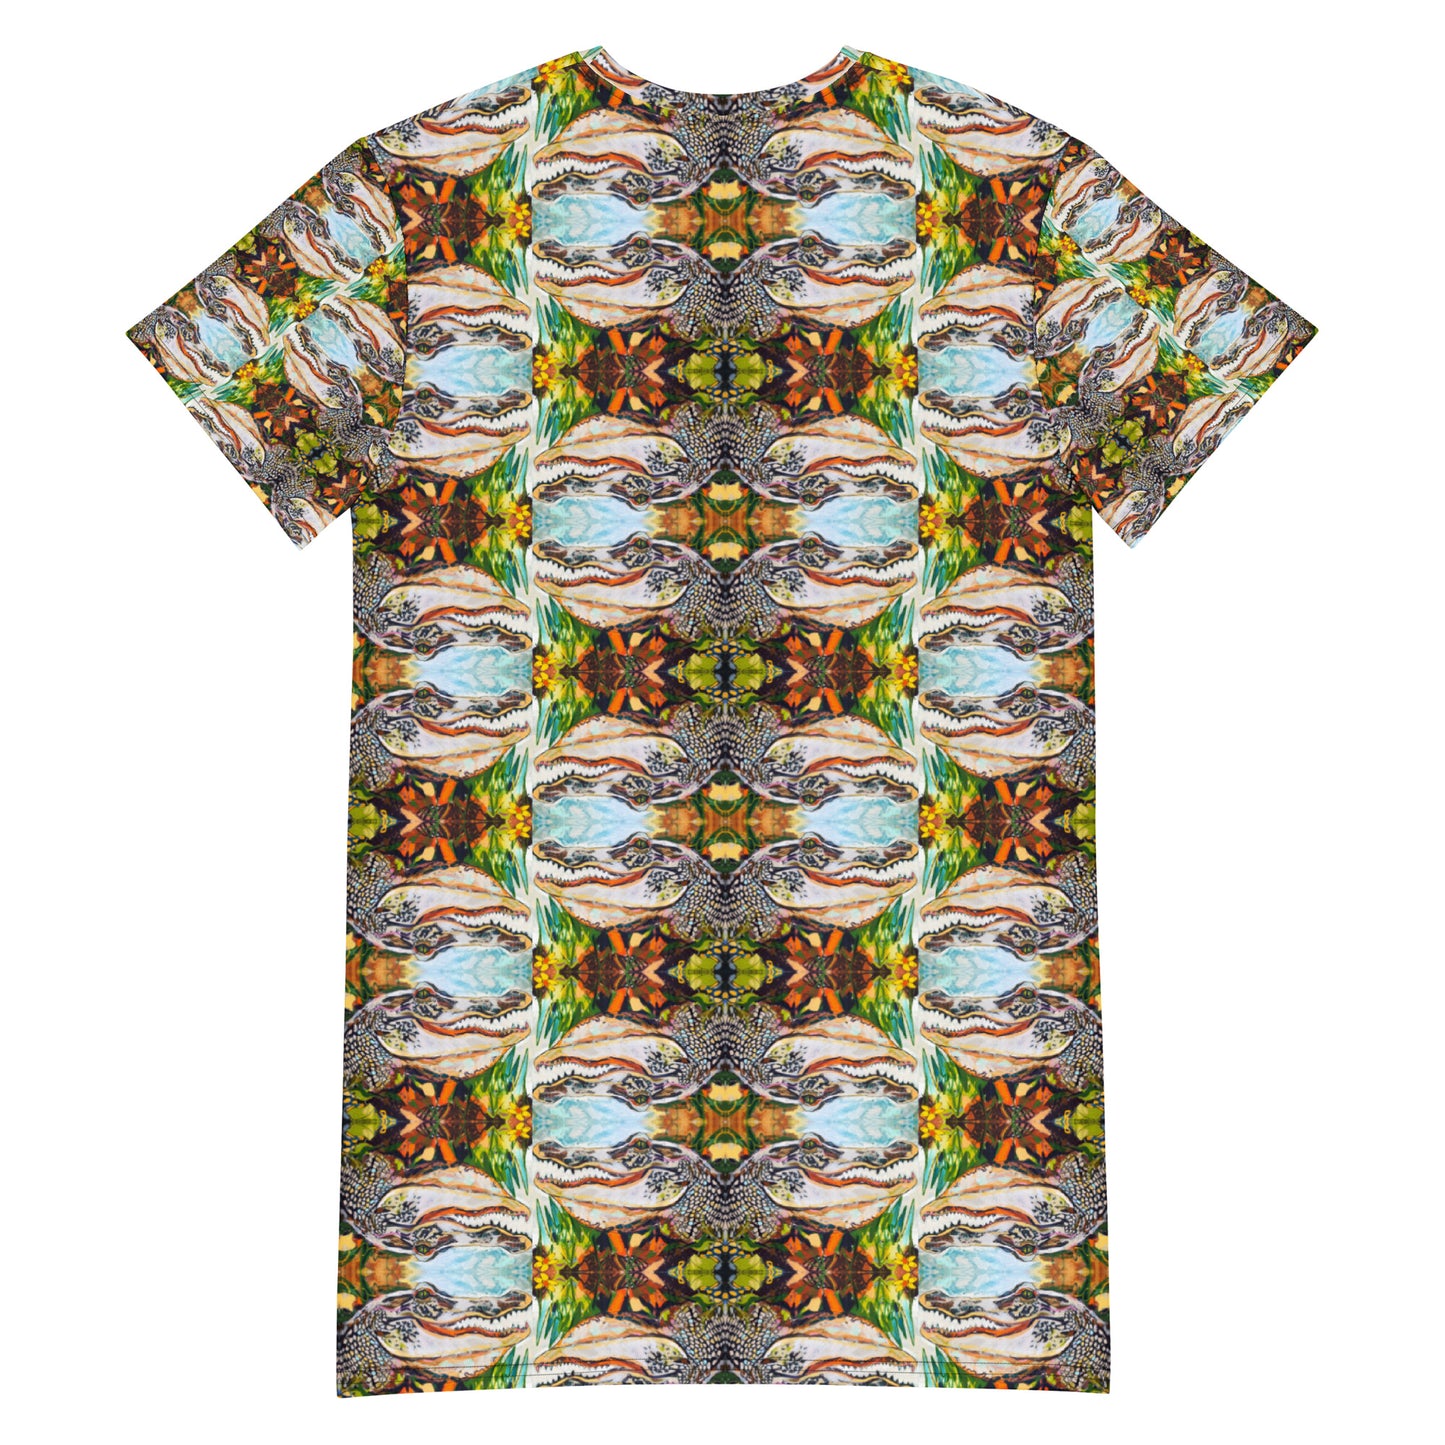 Groovy Gator Pattern T-shirt dress